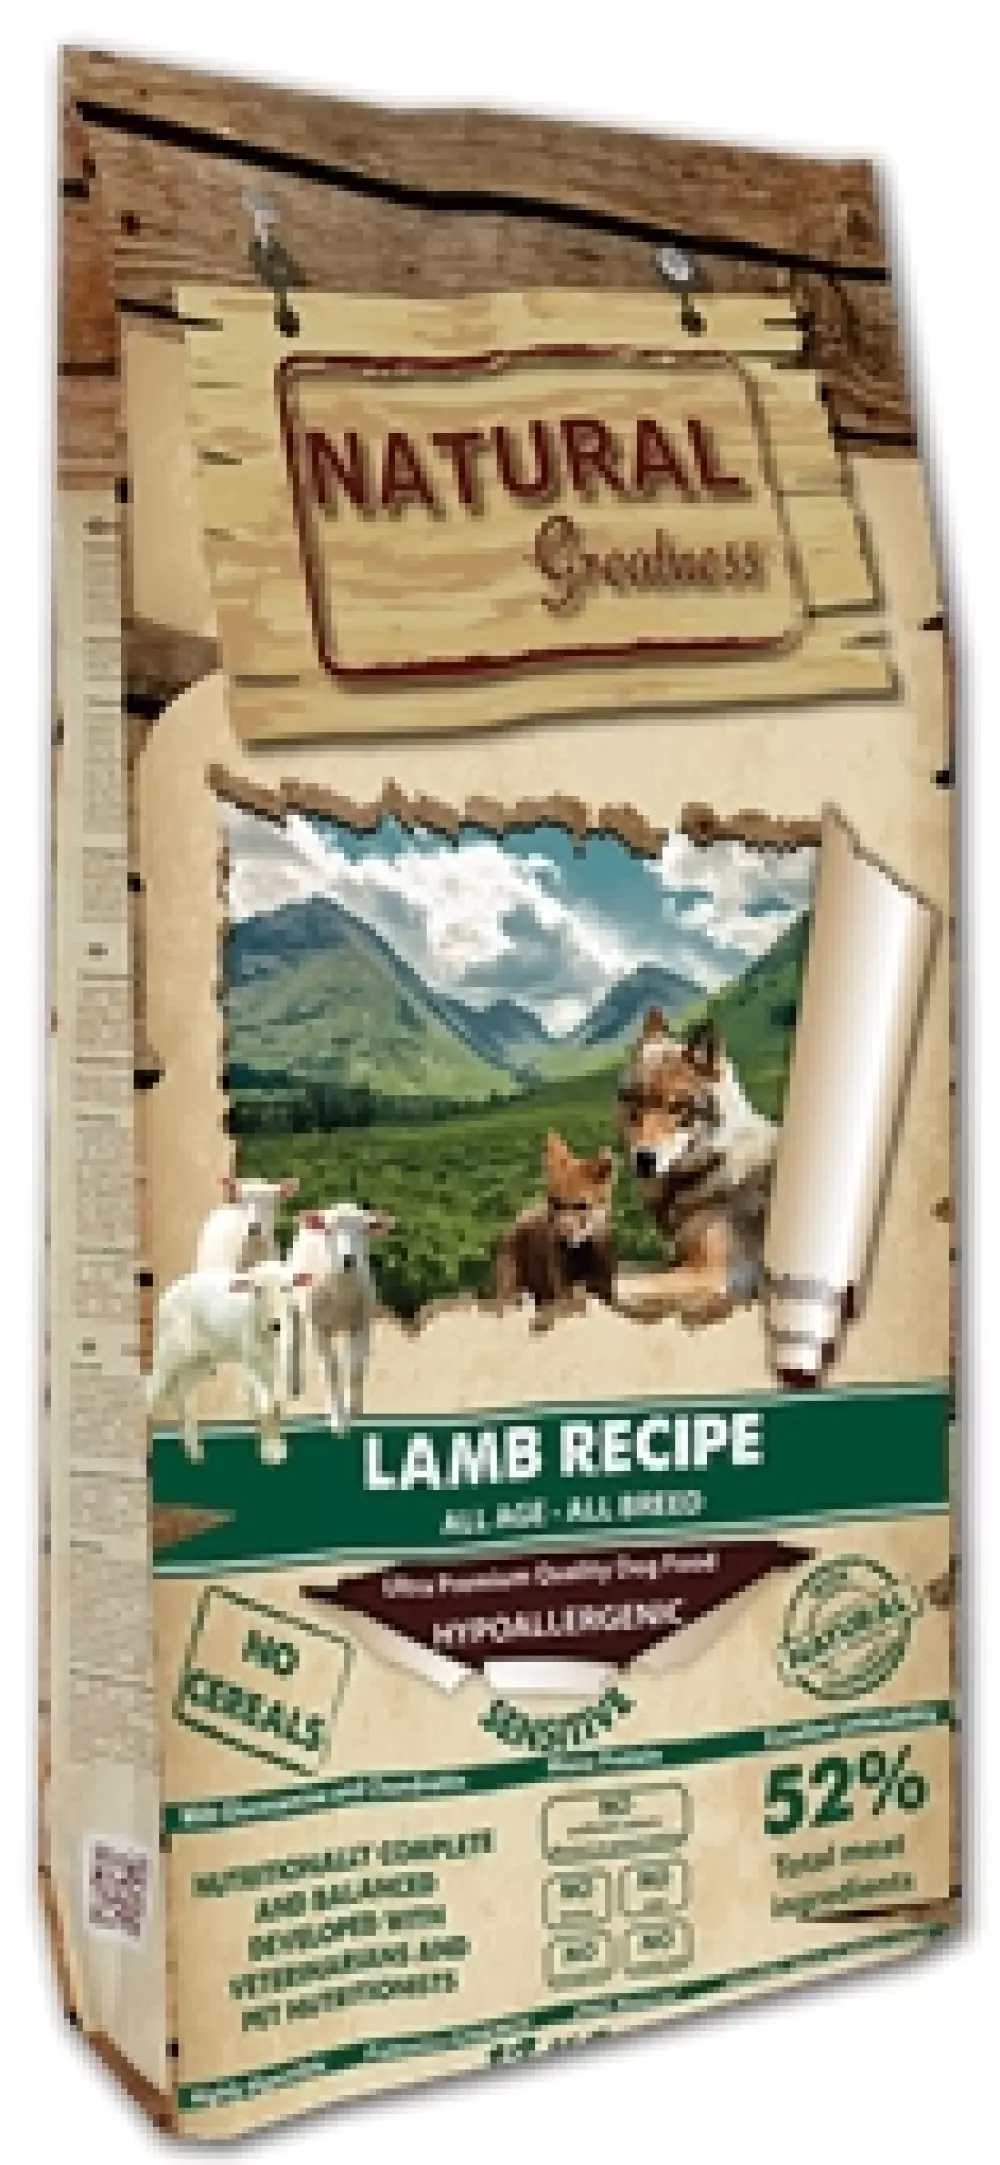 Natural Greatness Lamb Recipe - Sensitive10 kg, 8425402687390, Hundemat, Natural Greatness, Arctic Pets AS, Lamb Recipe - Sensitive, Tørrfor, Voksen